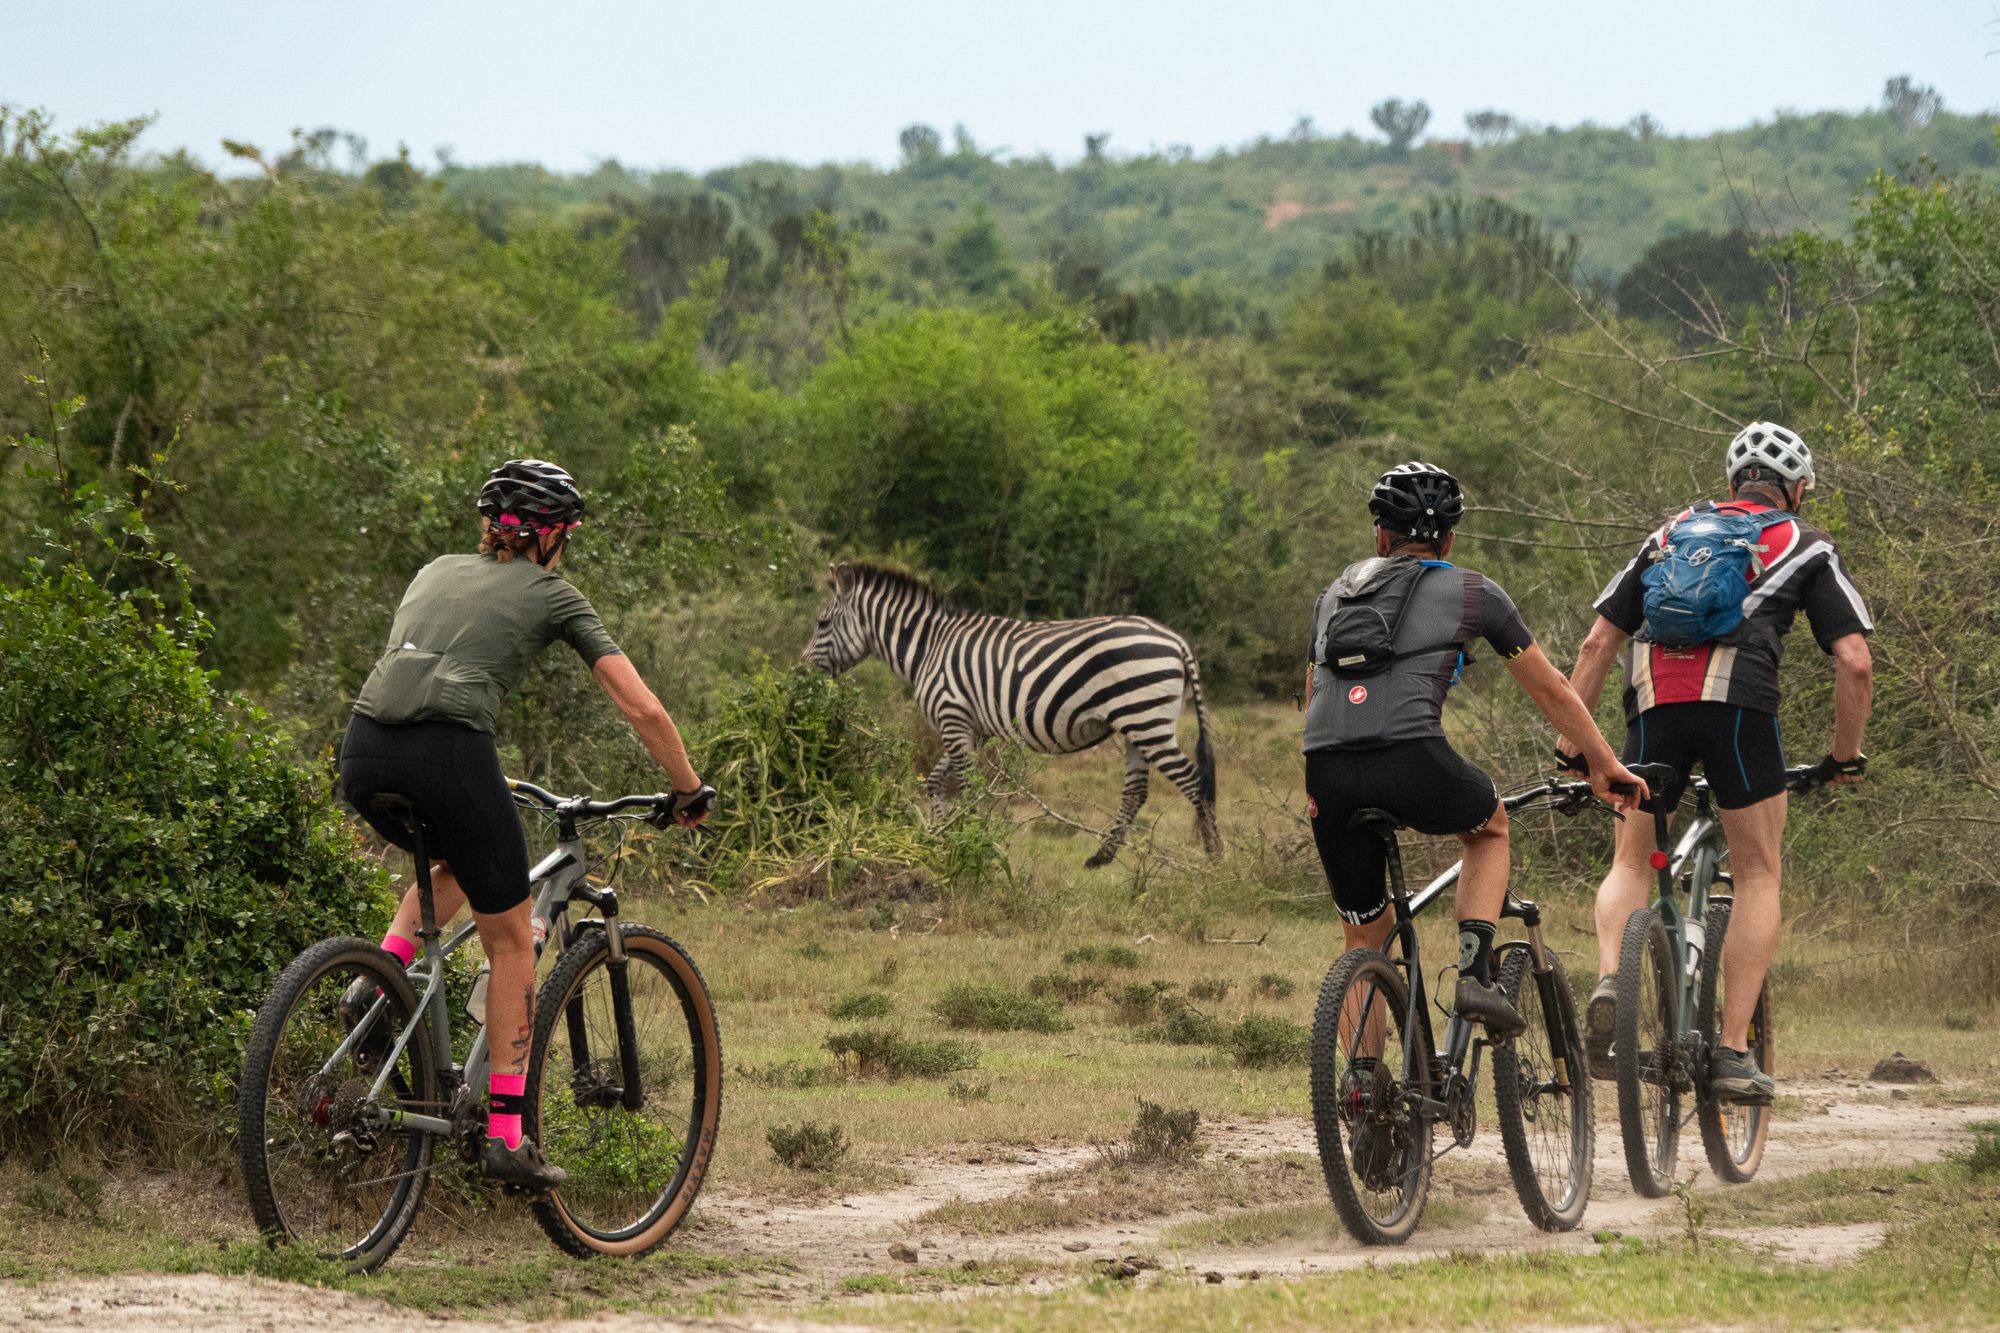 Three cyclists pedalling past a wild zebra.